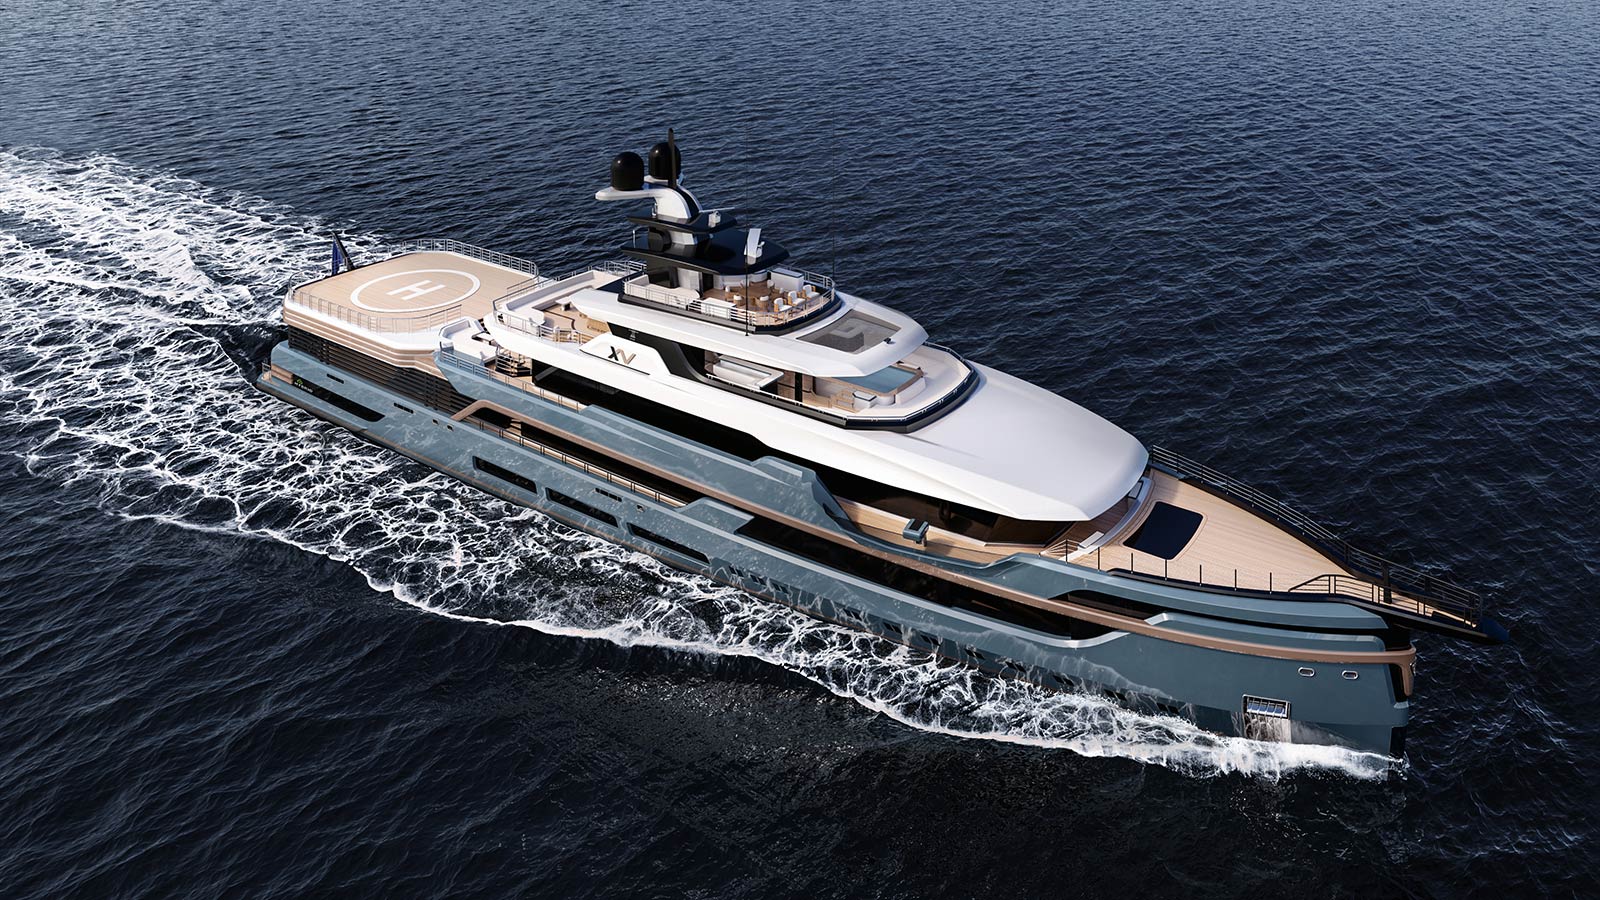 Heesen MYS 2022 YachtTalk Specials episode 2 – Heesen at the Monaco Yacht Show